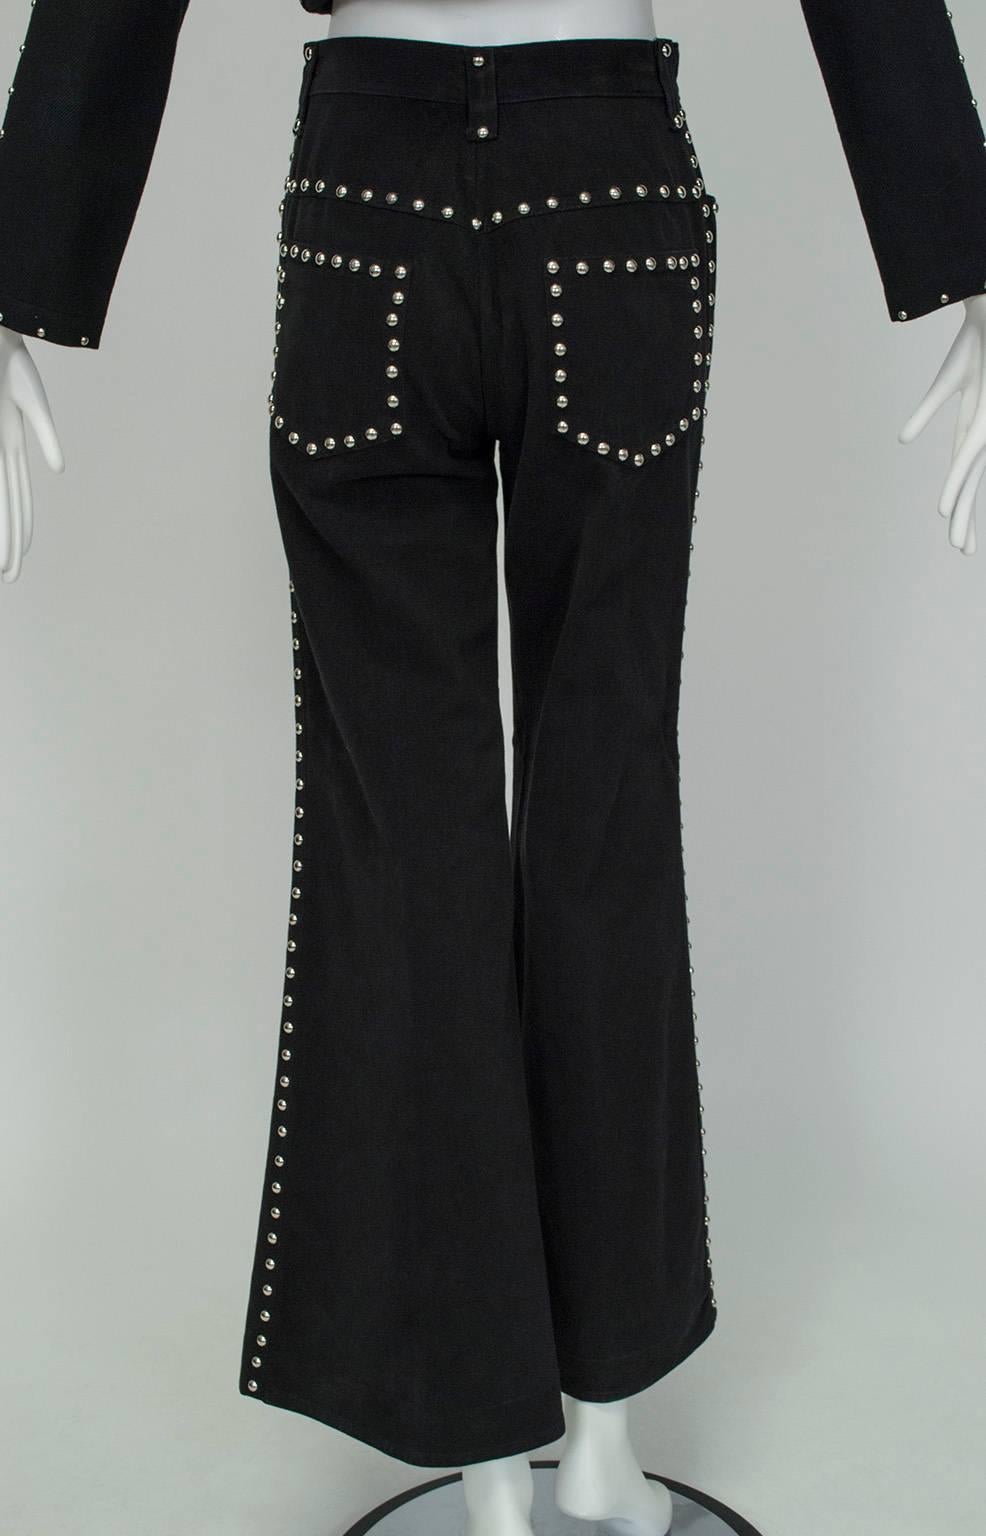 Graceland Black Silver Stud Wool Bellbottom Ranch Wear Rodeo Set - S-M, 1960s For Sale 1